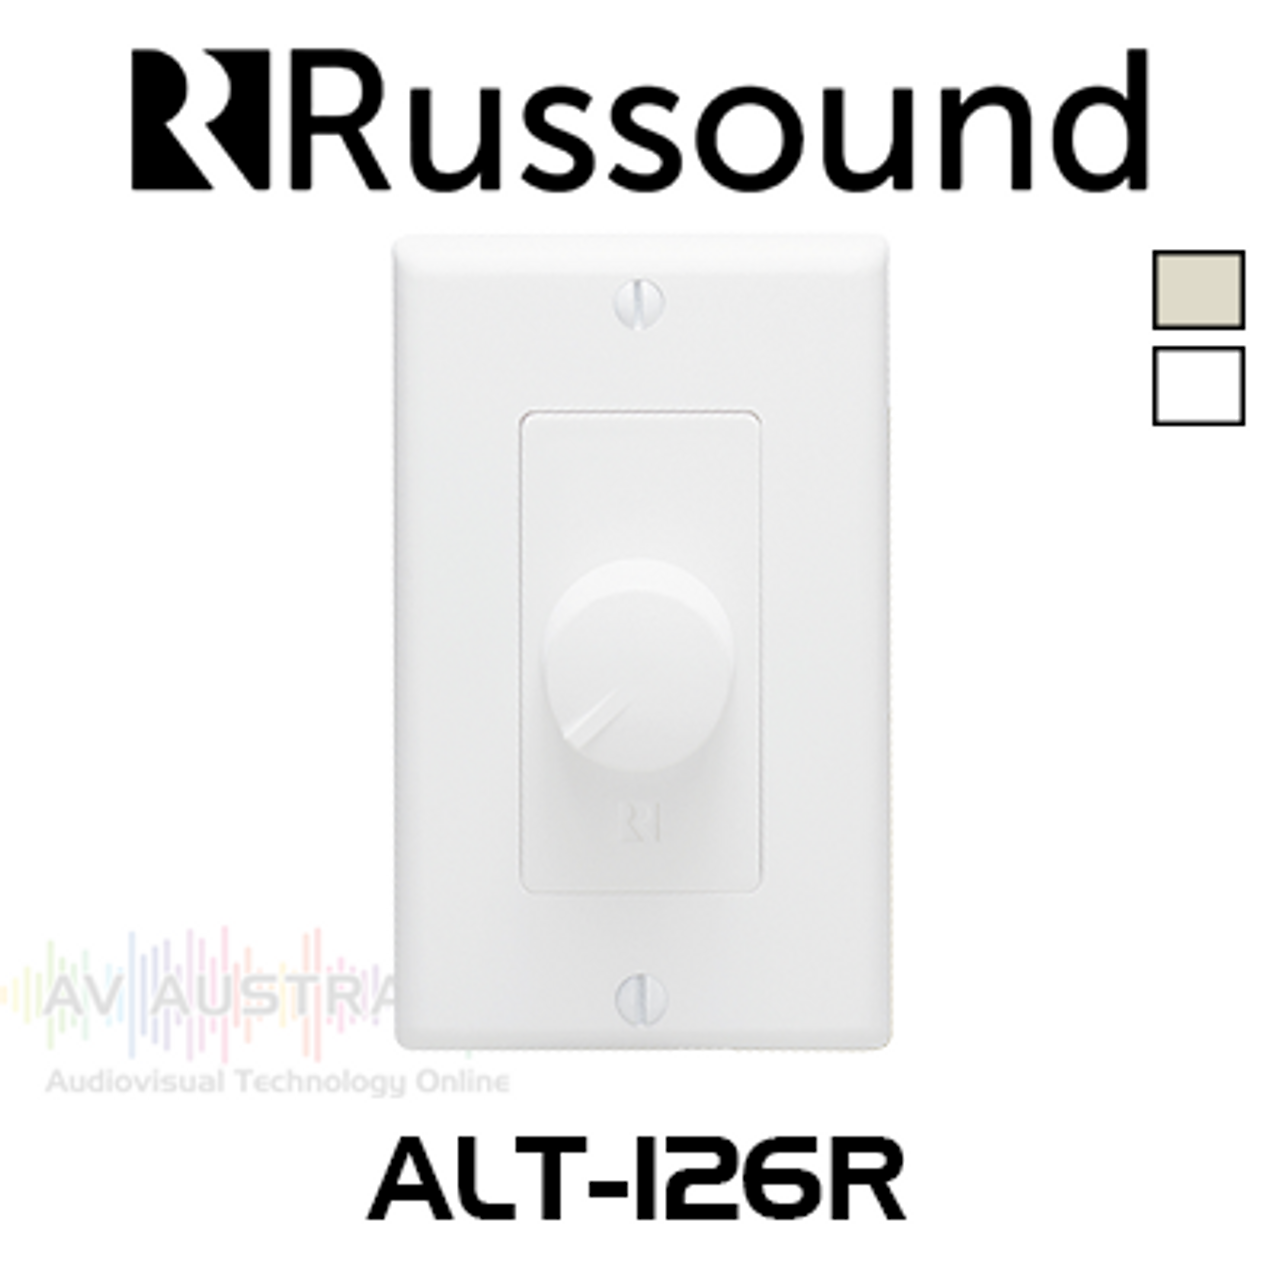 Russound 126W Impedance Matching Volume Control Wallplate